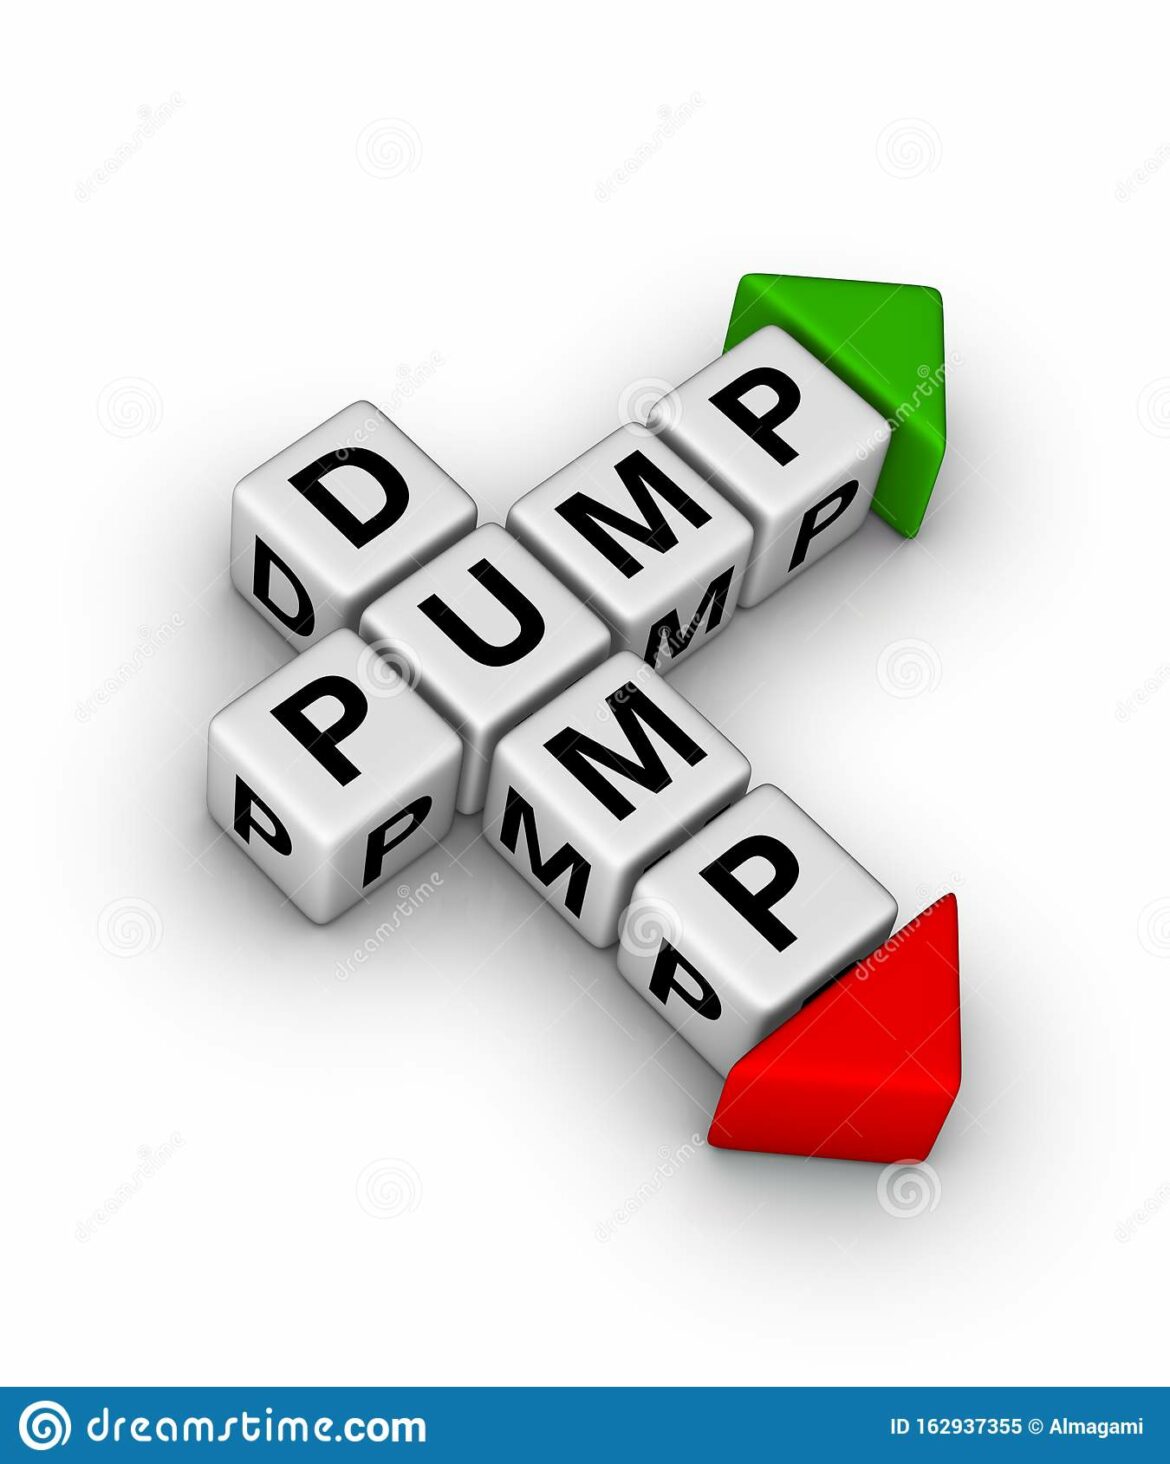 Pump and Dump (P&D) Scheme